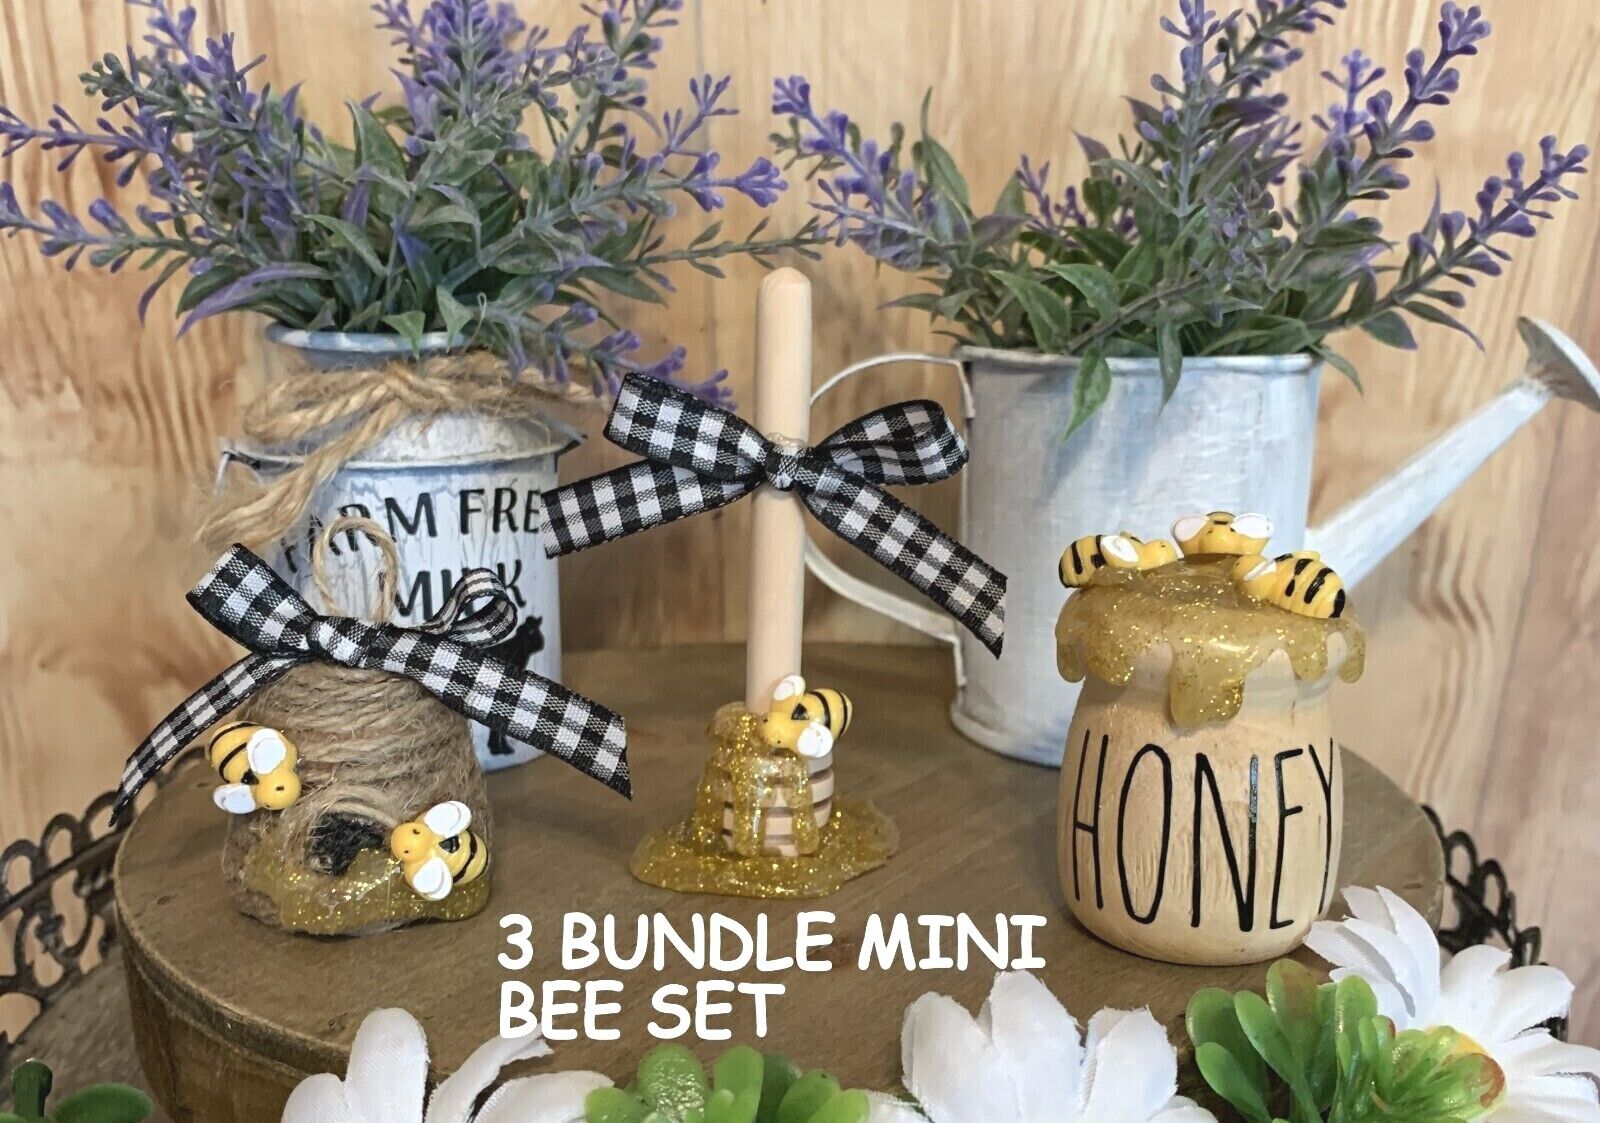 3 SET MINI BEE BUNDLE  HIVE, DIPPER & HONEY POT TIERED TRAY BEES FARMHOUSE DECOR Handmade Handcrafted